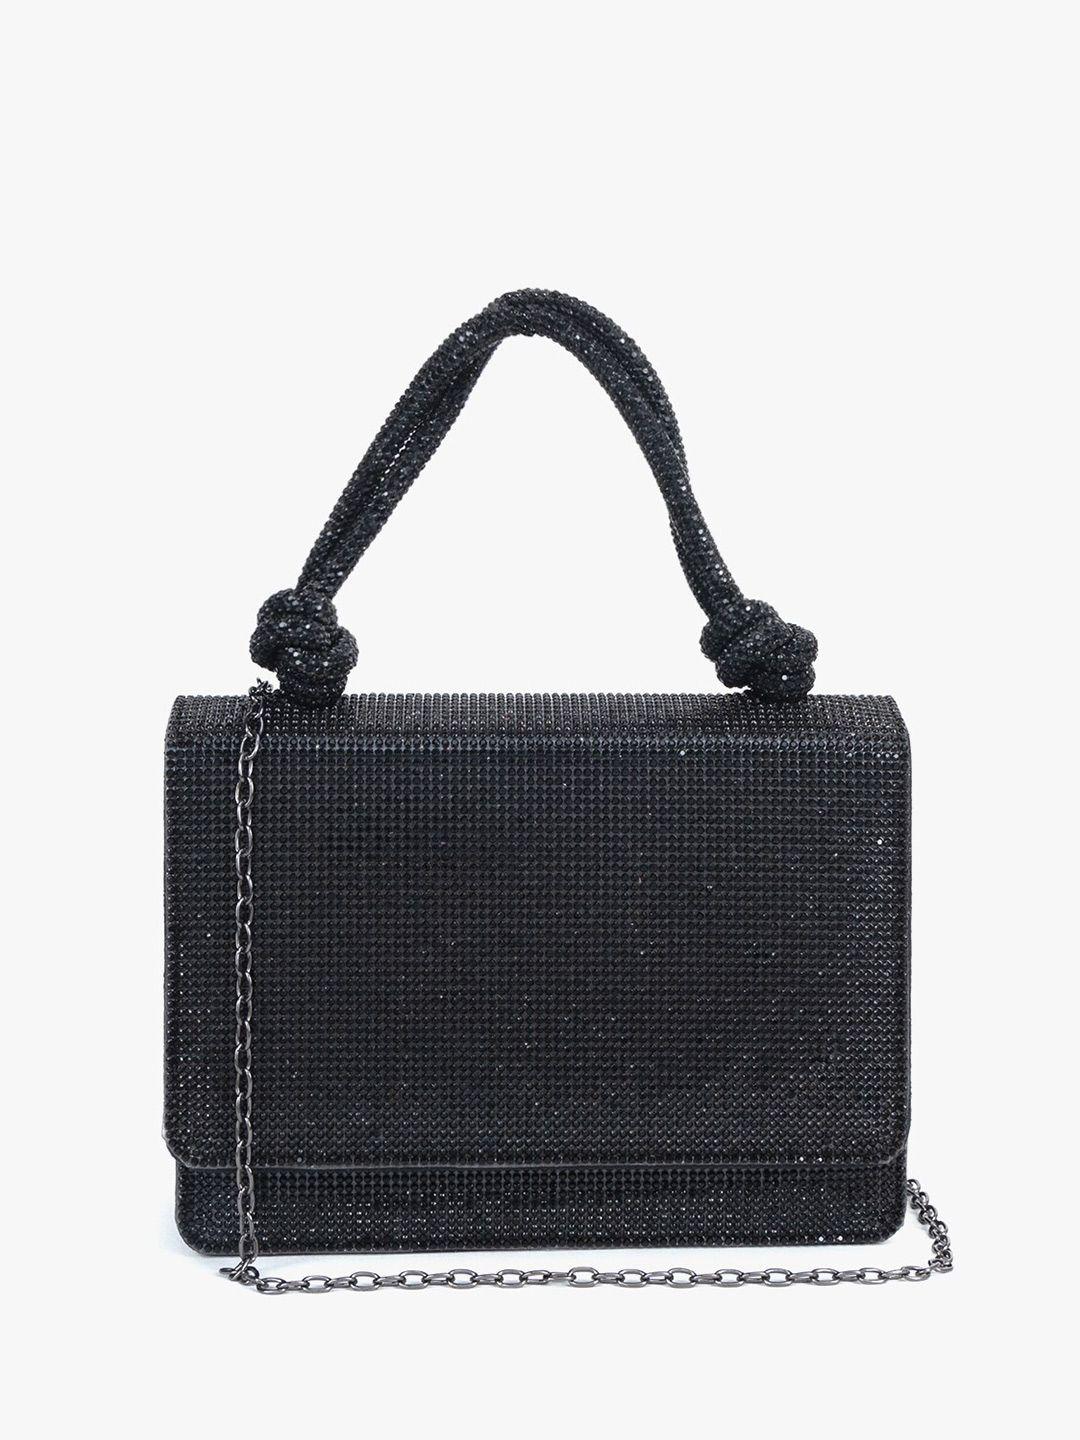 kazo black embellished purse clutch